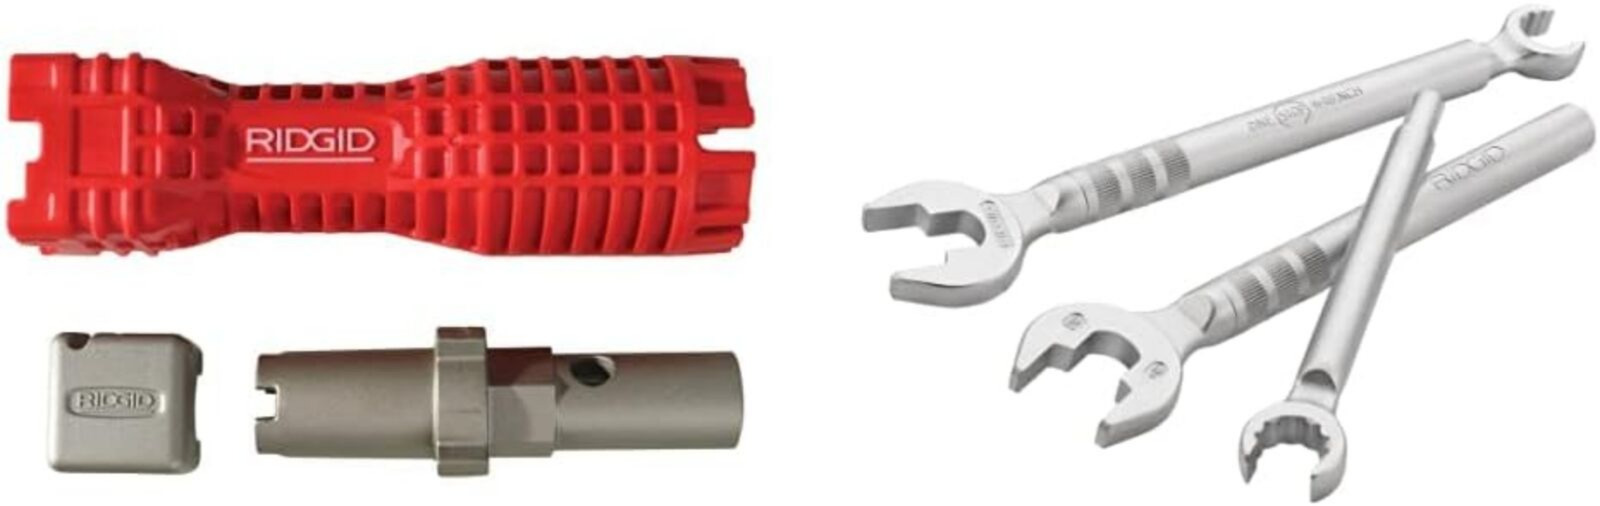 Plumbing Tool Bundle for Faucet and Valve Installation,Aluminum, Plastic